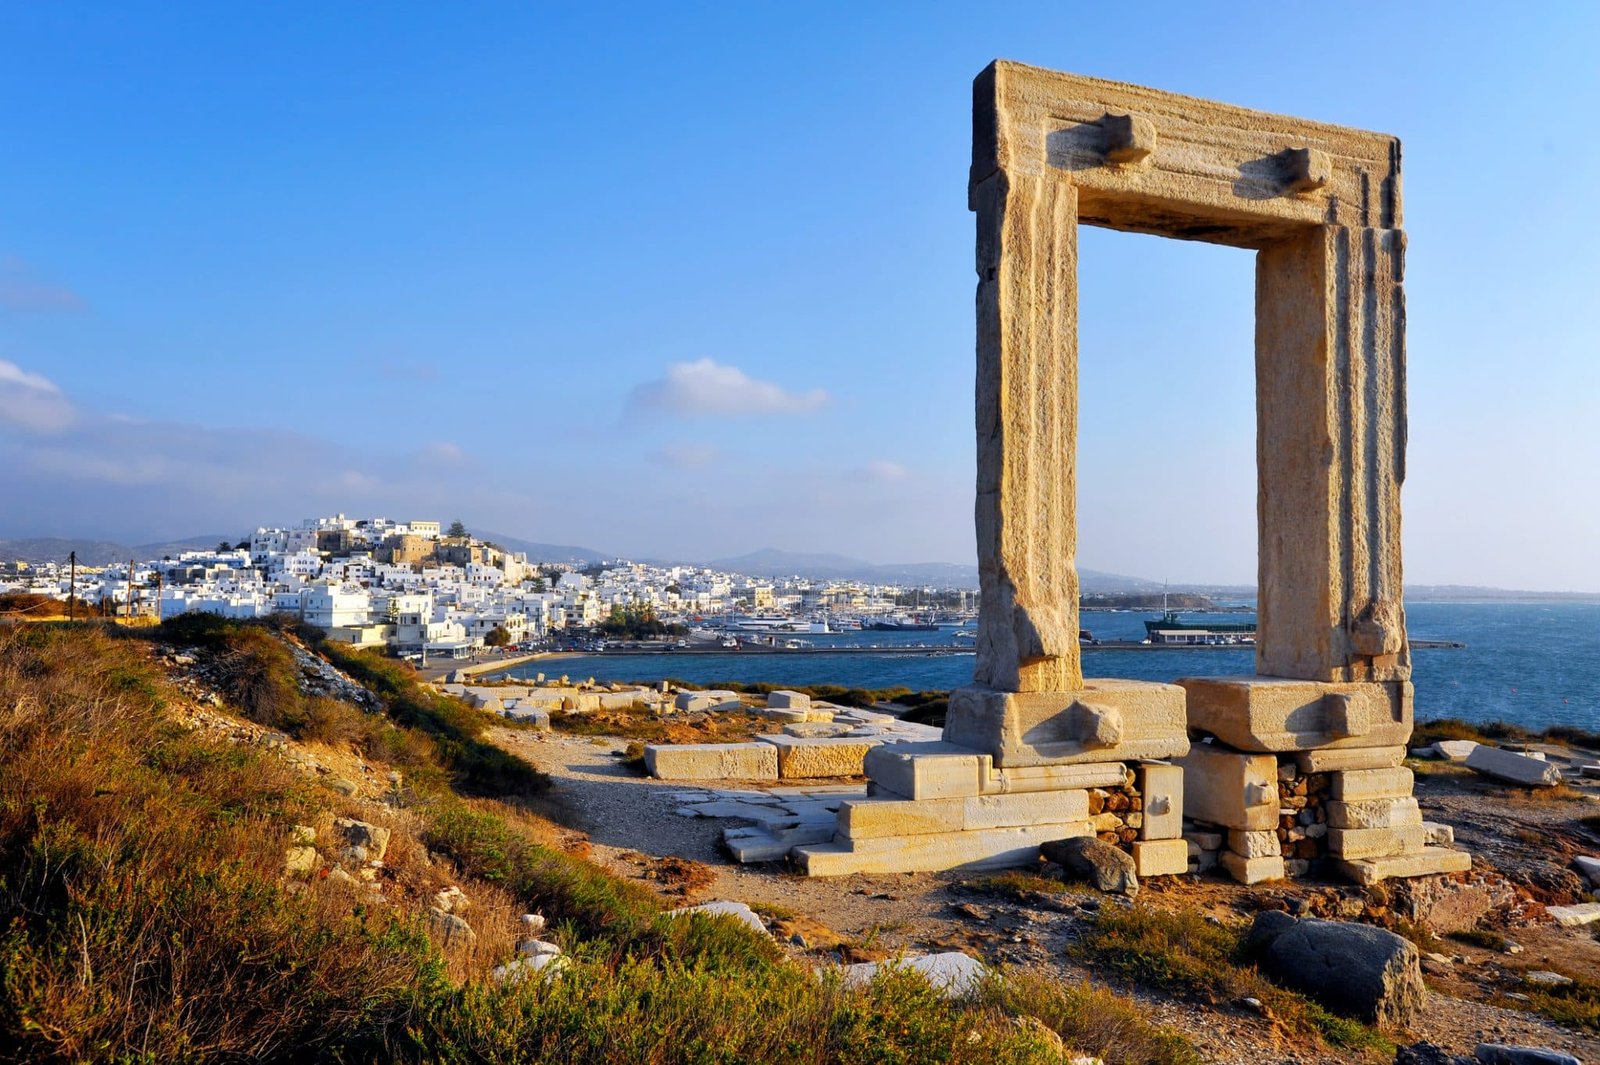 Portara gate, Naxos island, Greece